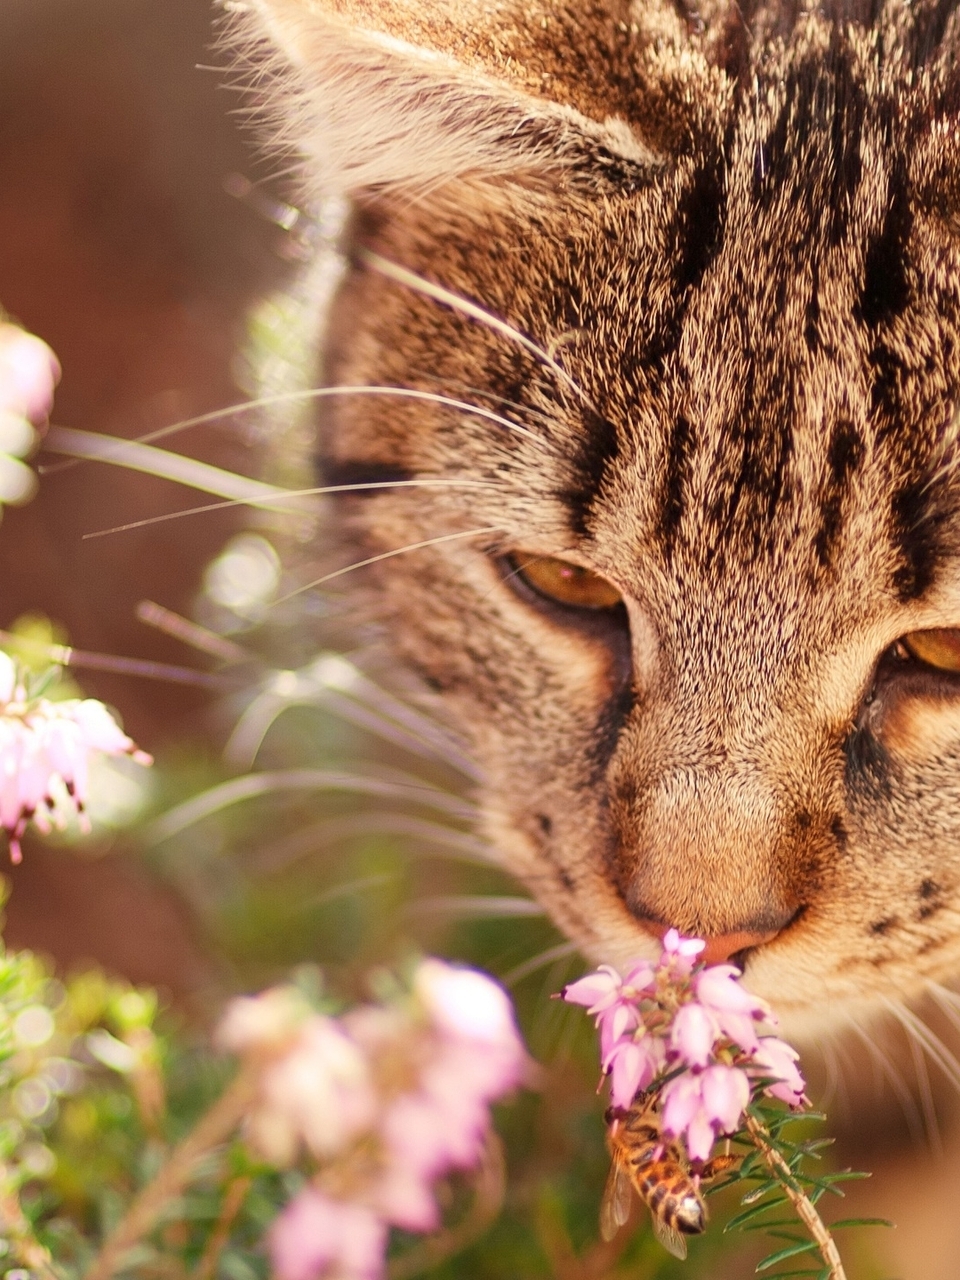 Image: Cat, flowers, sniffing, muzzle